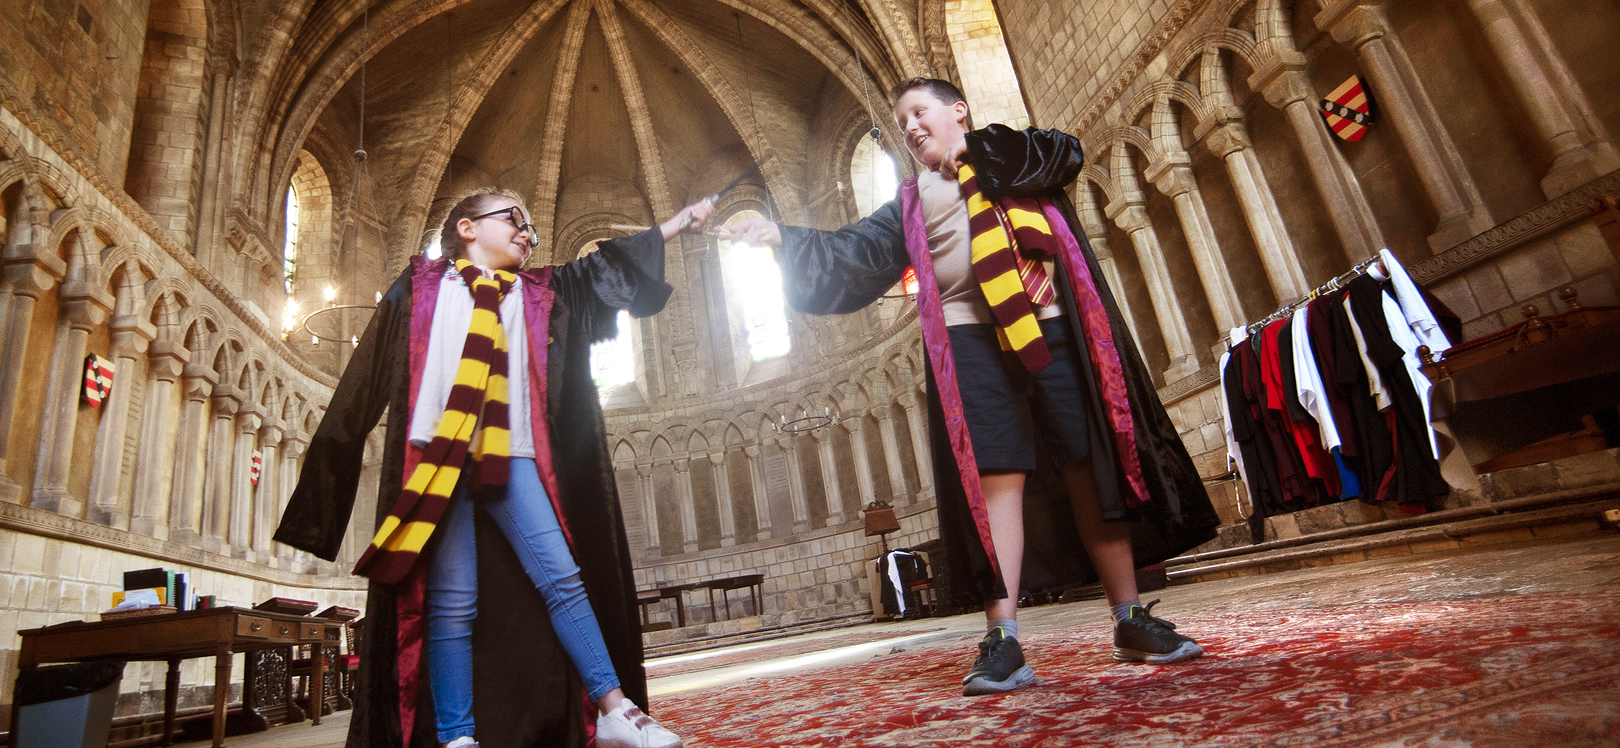 Kids pretending to be Harry Potter